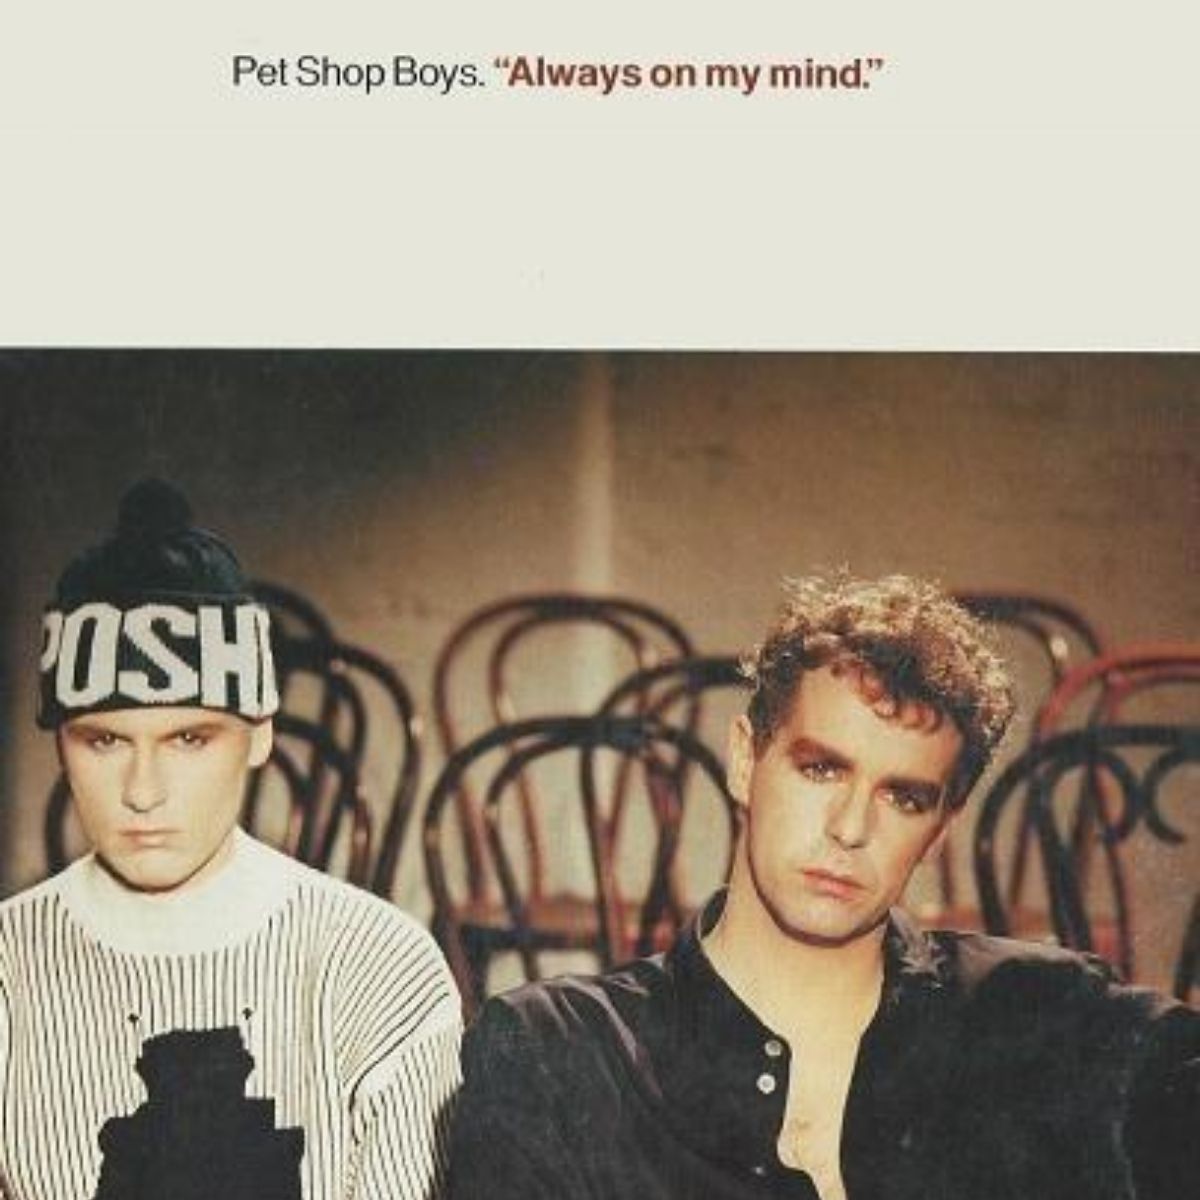 Titelbild der Pet Shop Boys Single "Always on My Mind"